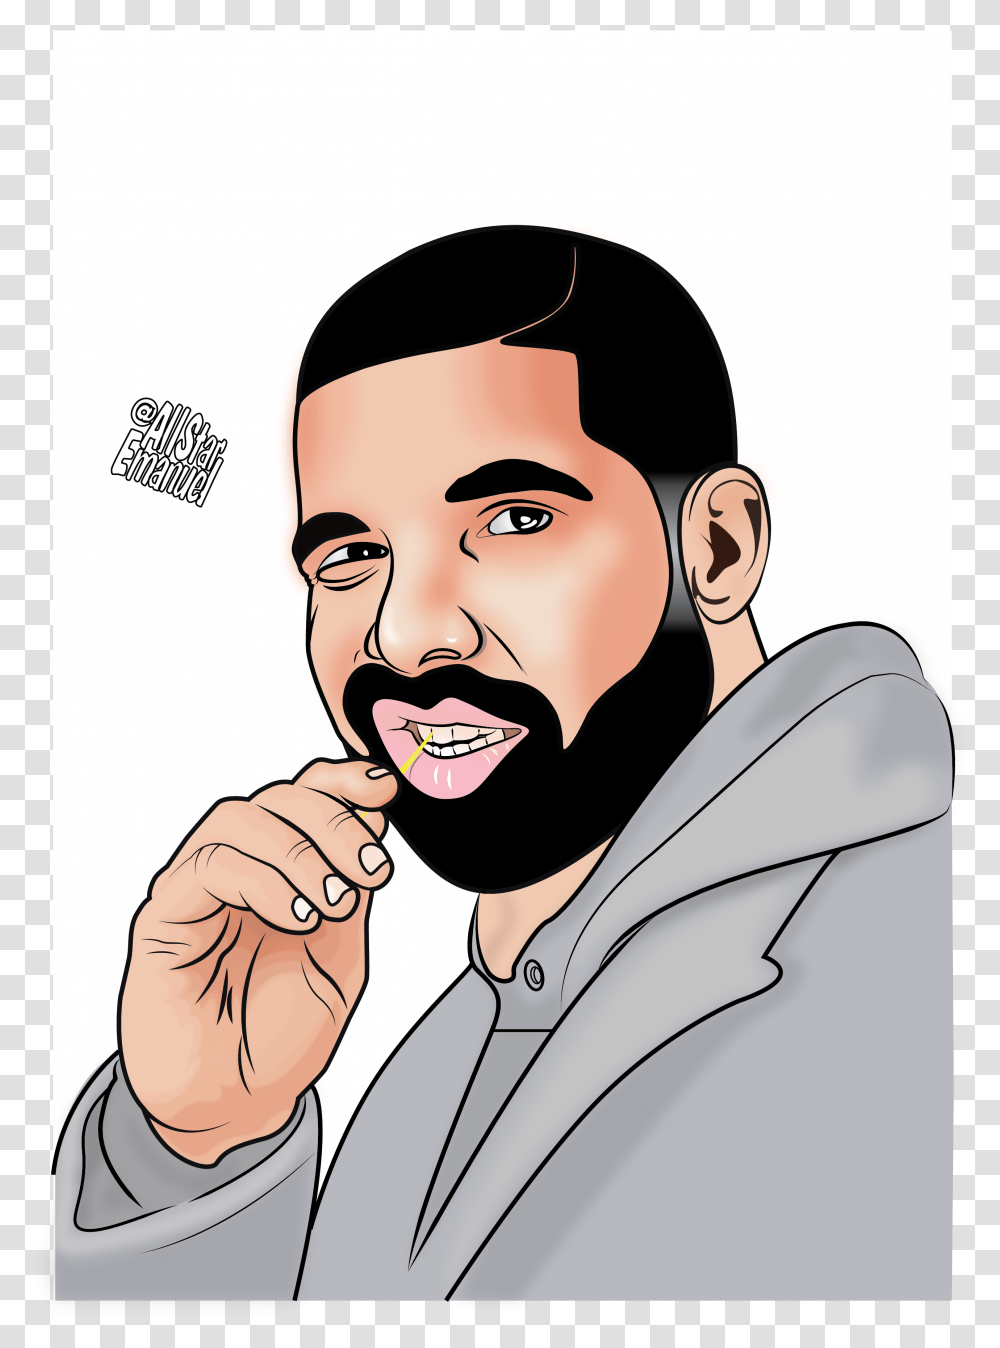 Drake Drawing Painting Cartoon Sketch Drake Drawing Cartoon, Face, Person, Human, Beard Transparent Png